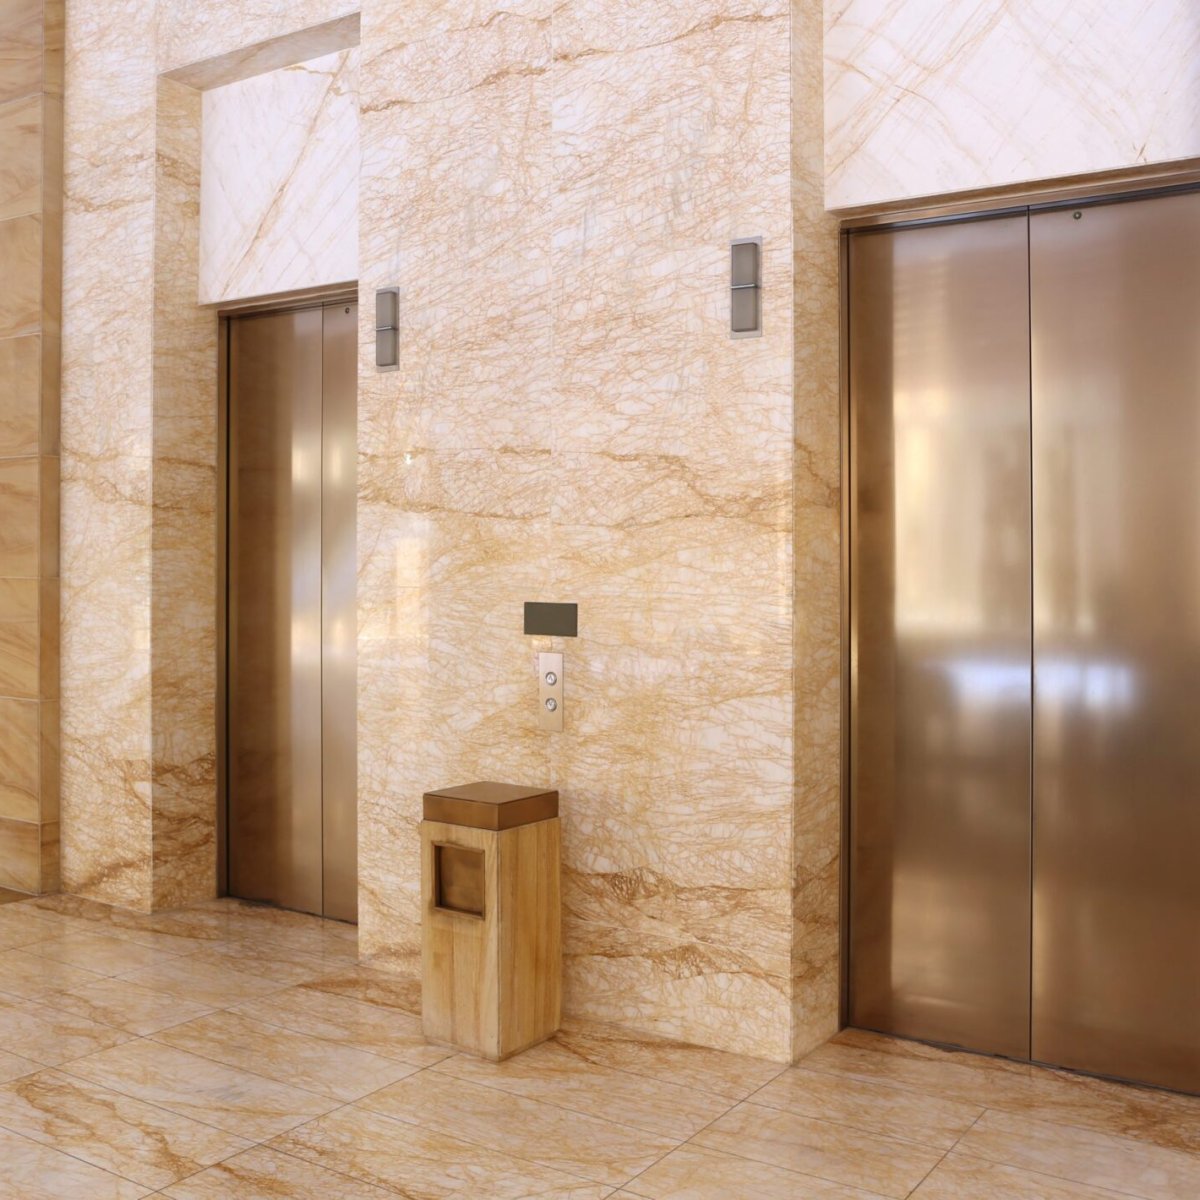  Modernisation | Simplex Elevators Gallery Image 6